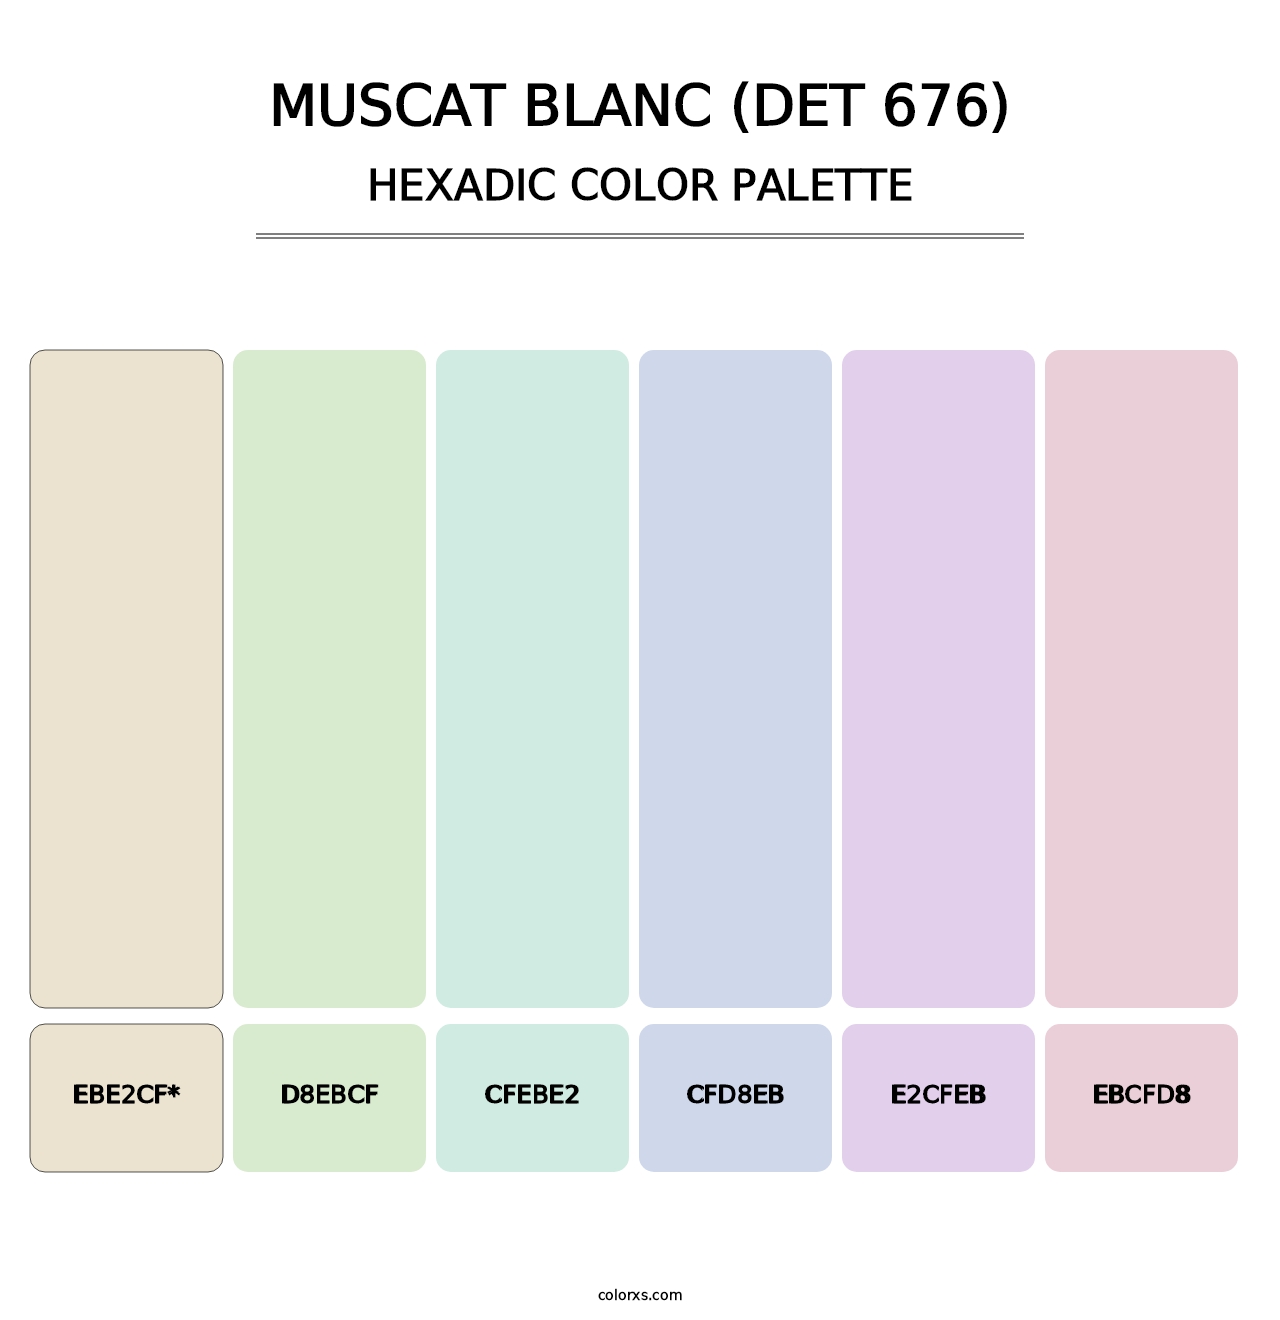 Muscat Blanc (DET 676) - Hexadic Color Palette